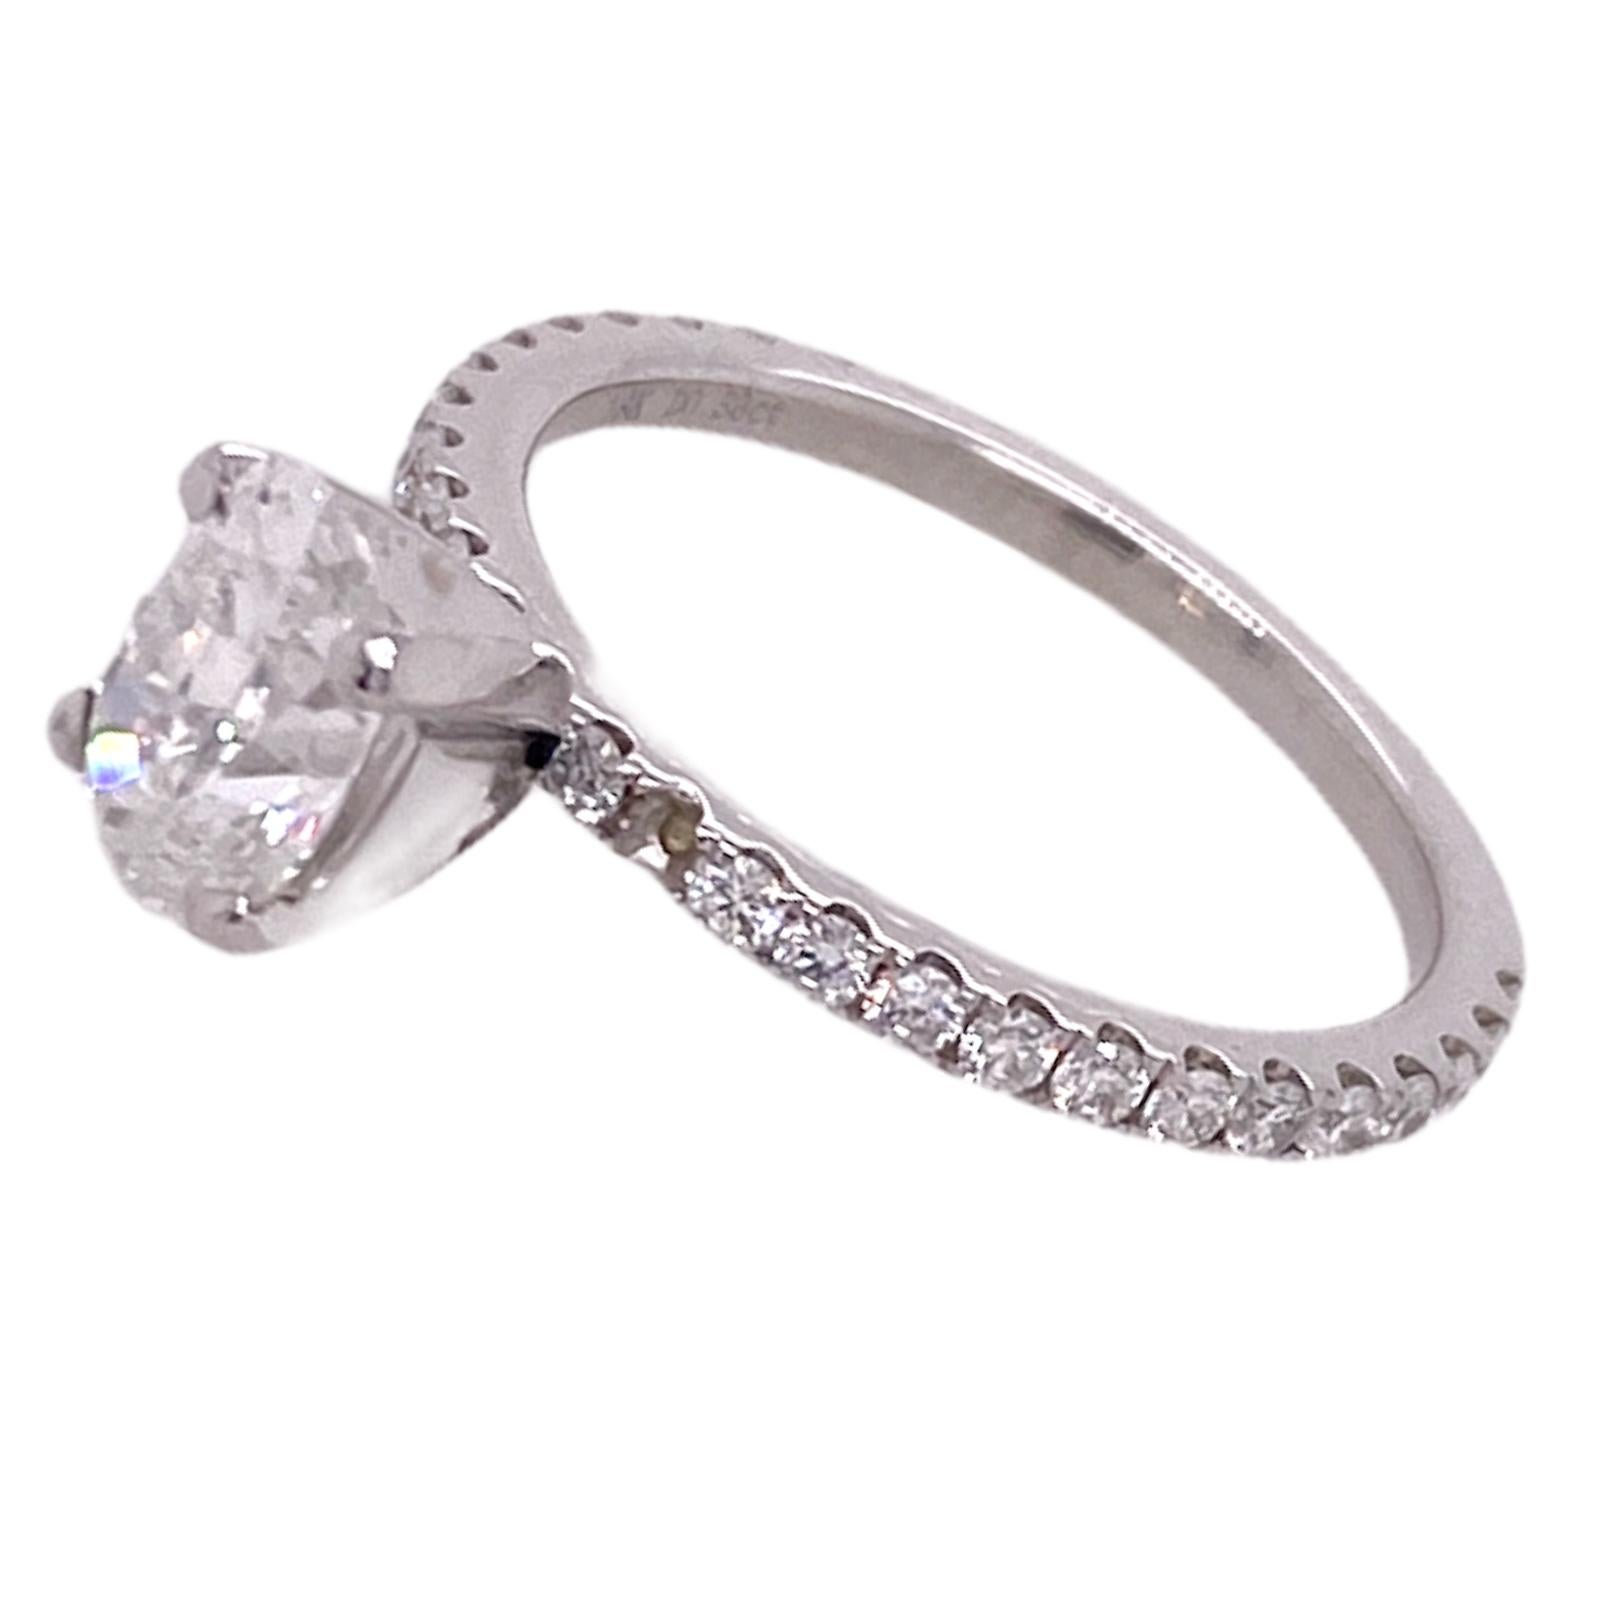 Oval Cut Oval Diamond Engagment Ring 18 Karat White Gold Diamond GIA Certified Diamond